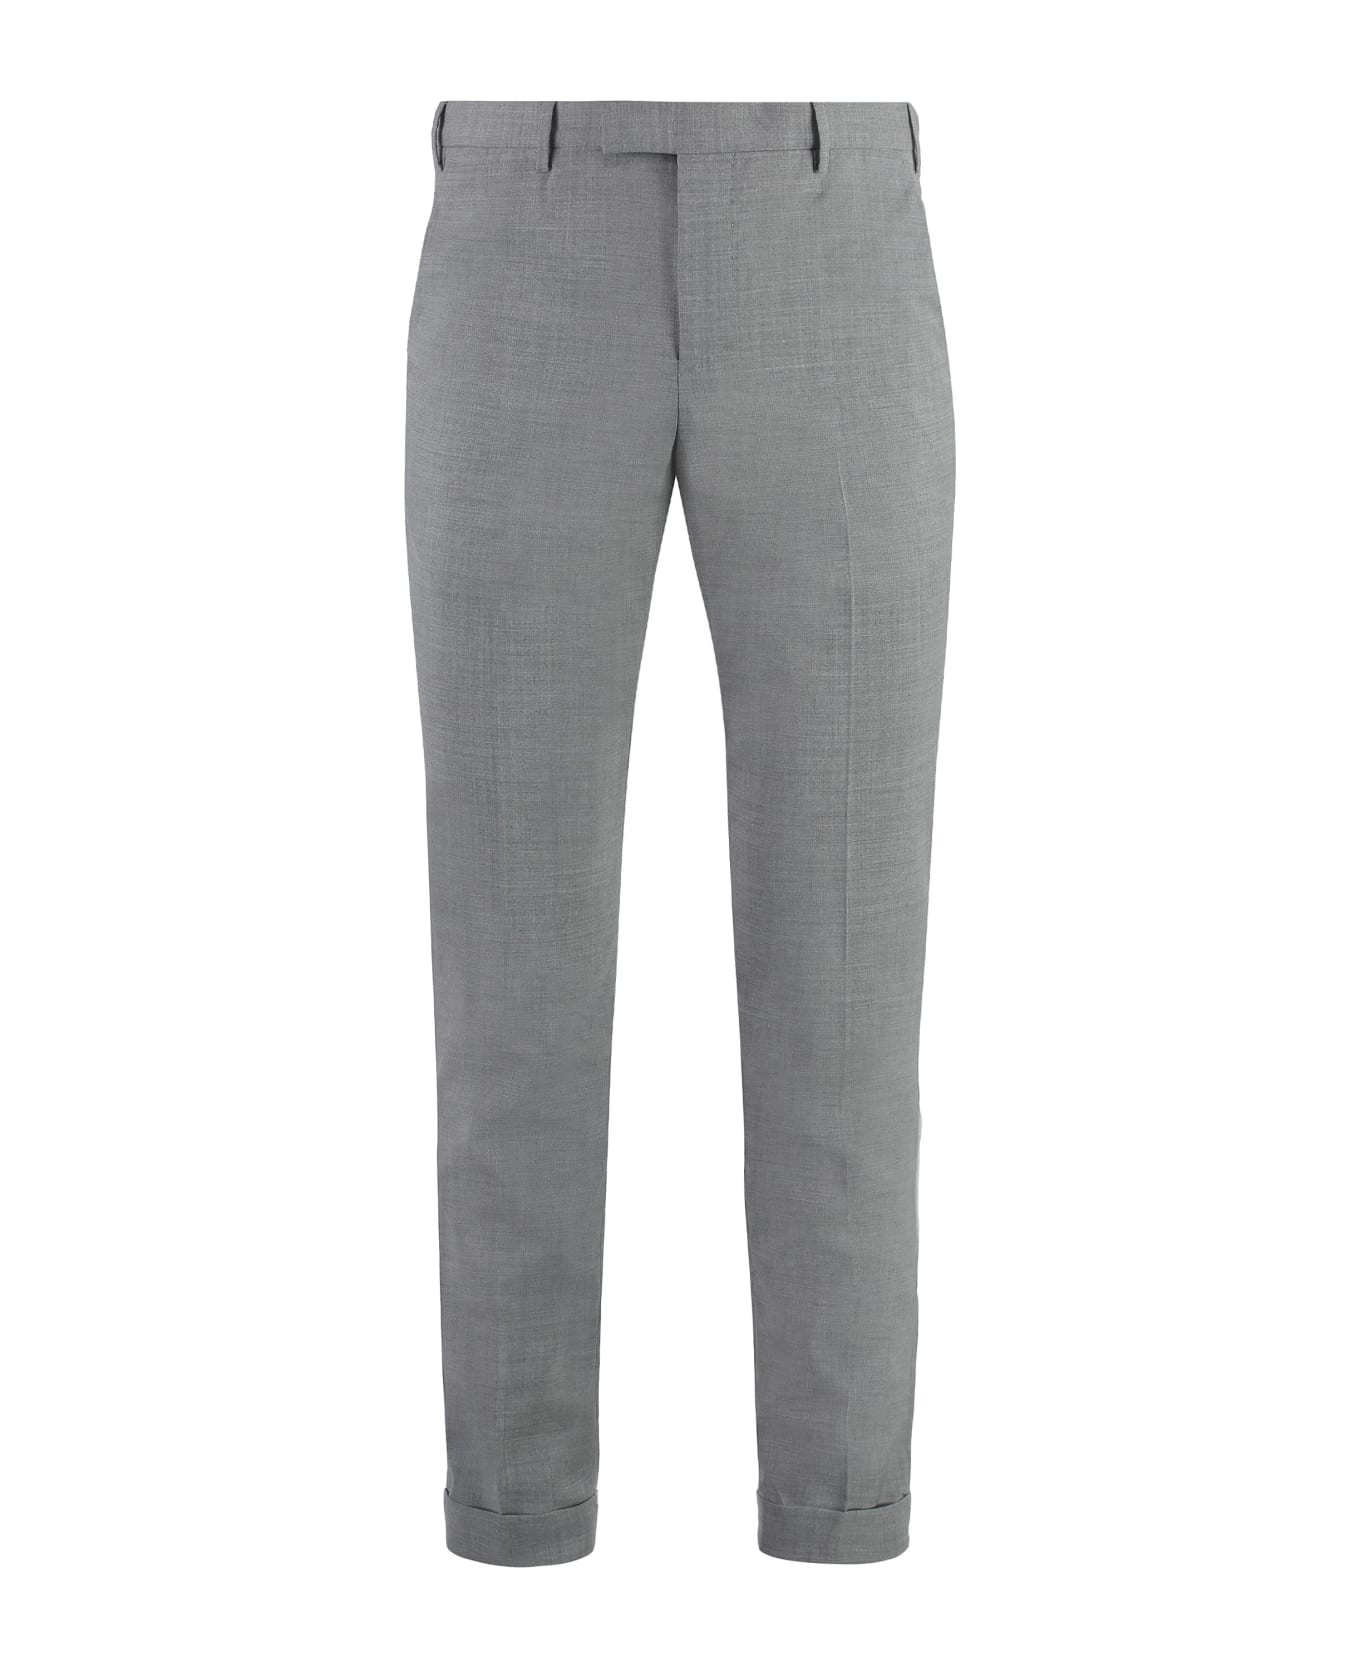 PT Torino Cotton Trousers - grey